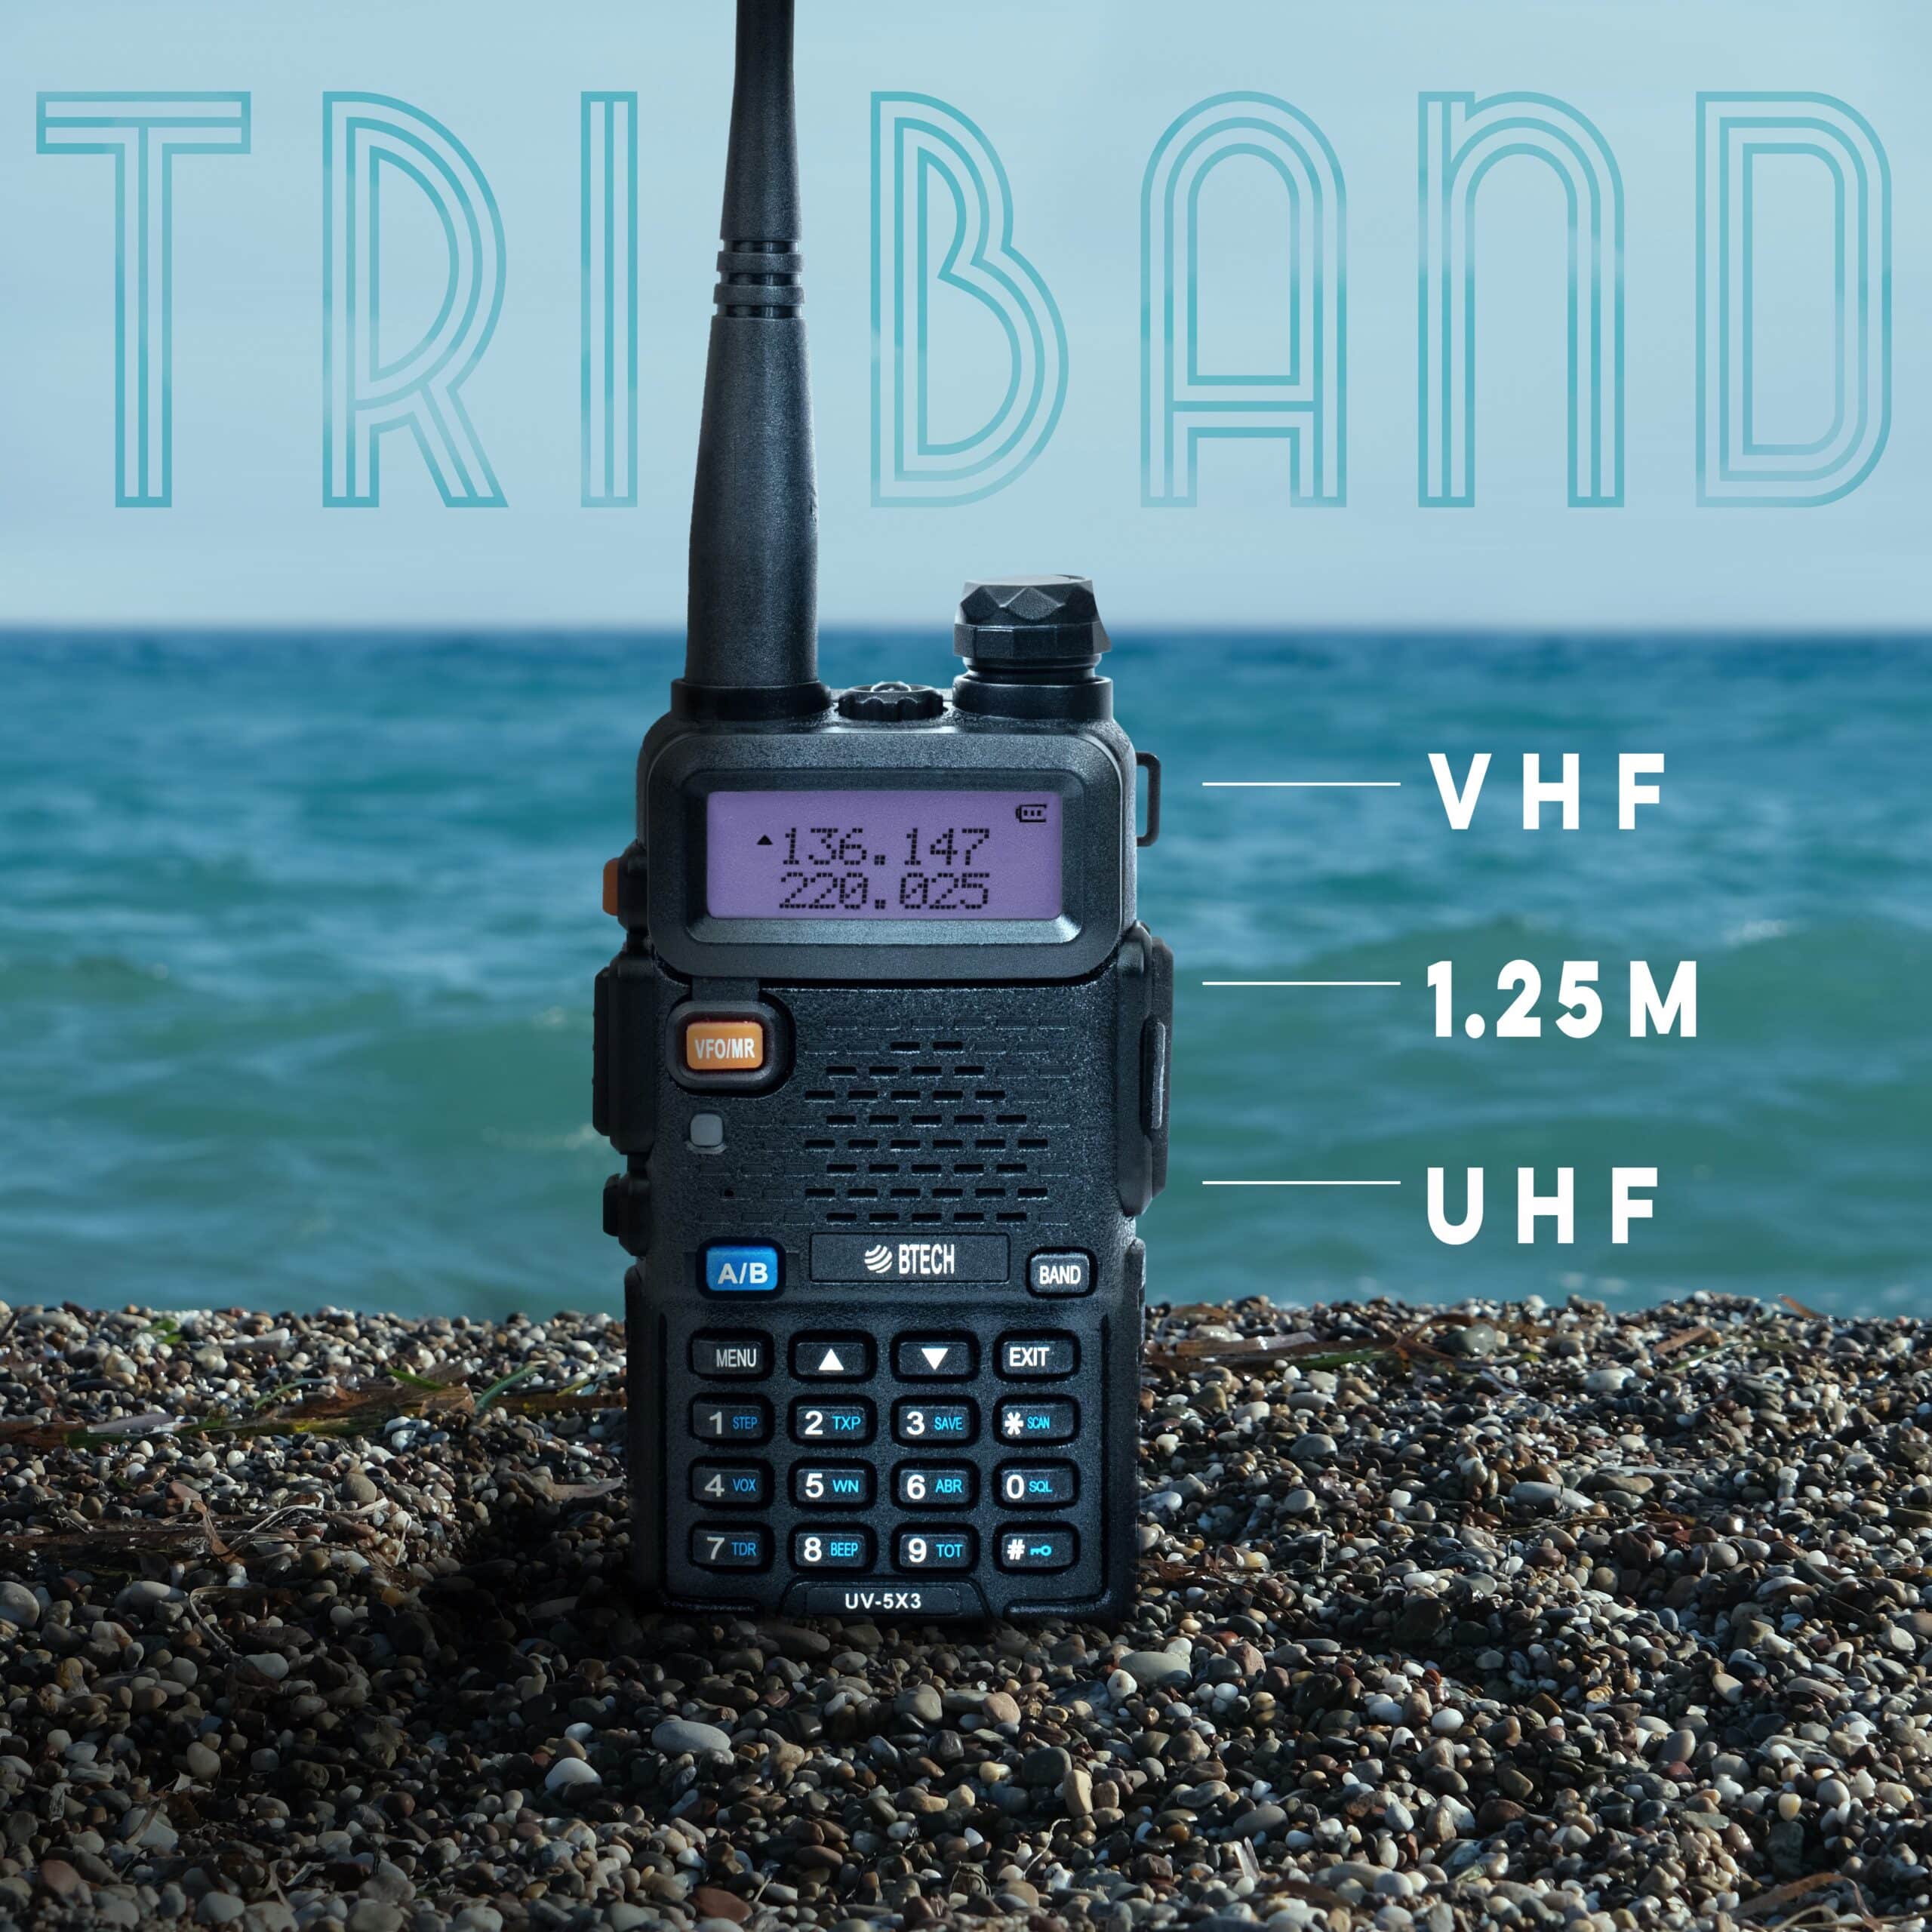 Tri-Band Radio BAOFENG Radio UV-S9X3 5W Radio, 1.25M,VHF UHF Handheld Two Way Radio,USB Charger Rechargeable Walkie Talkies Long Range for Adults with - 3